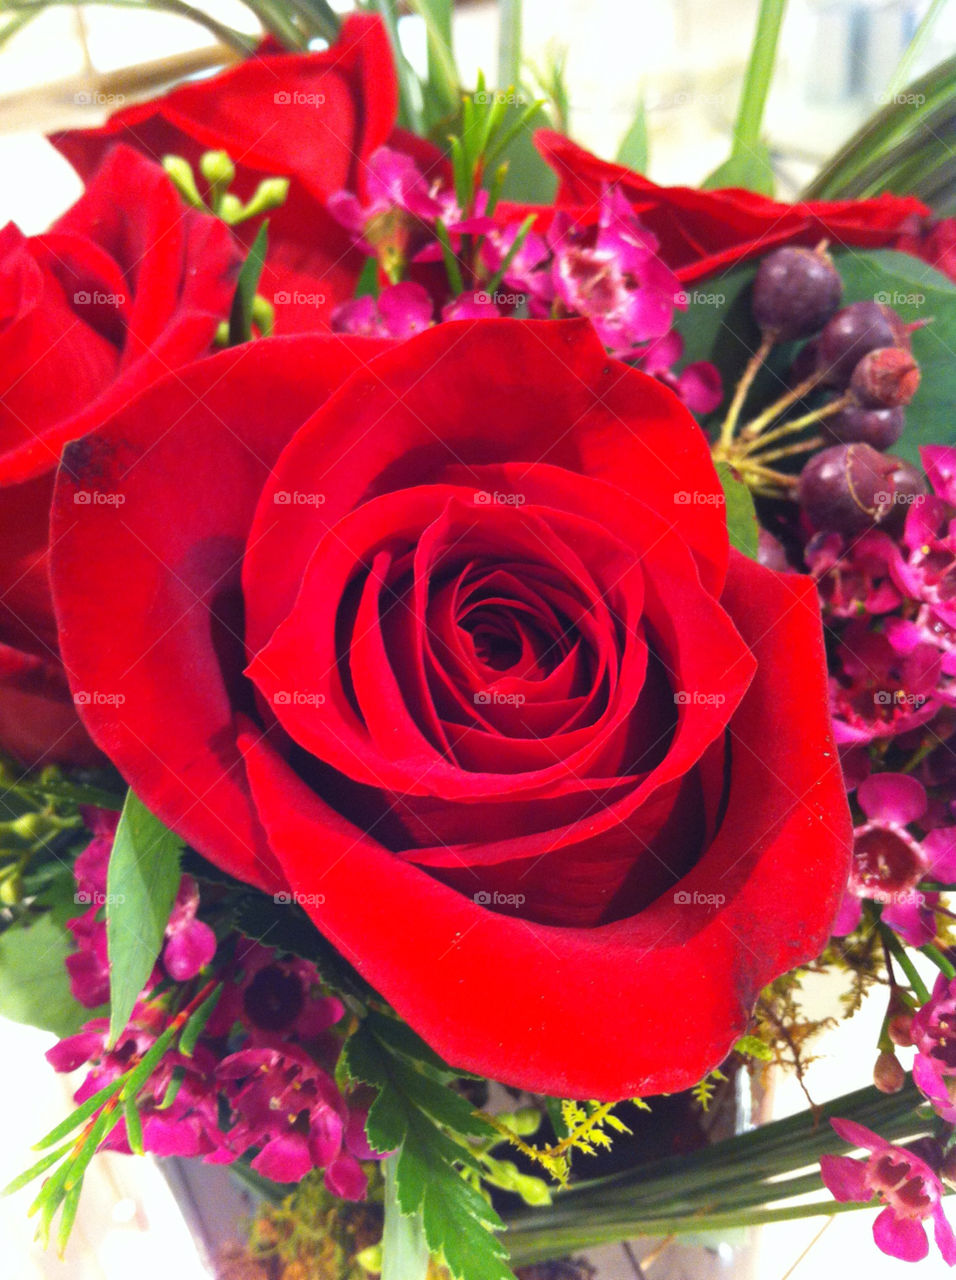 flower red rose arrangement by silkenjade